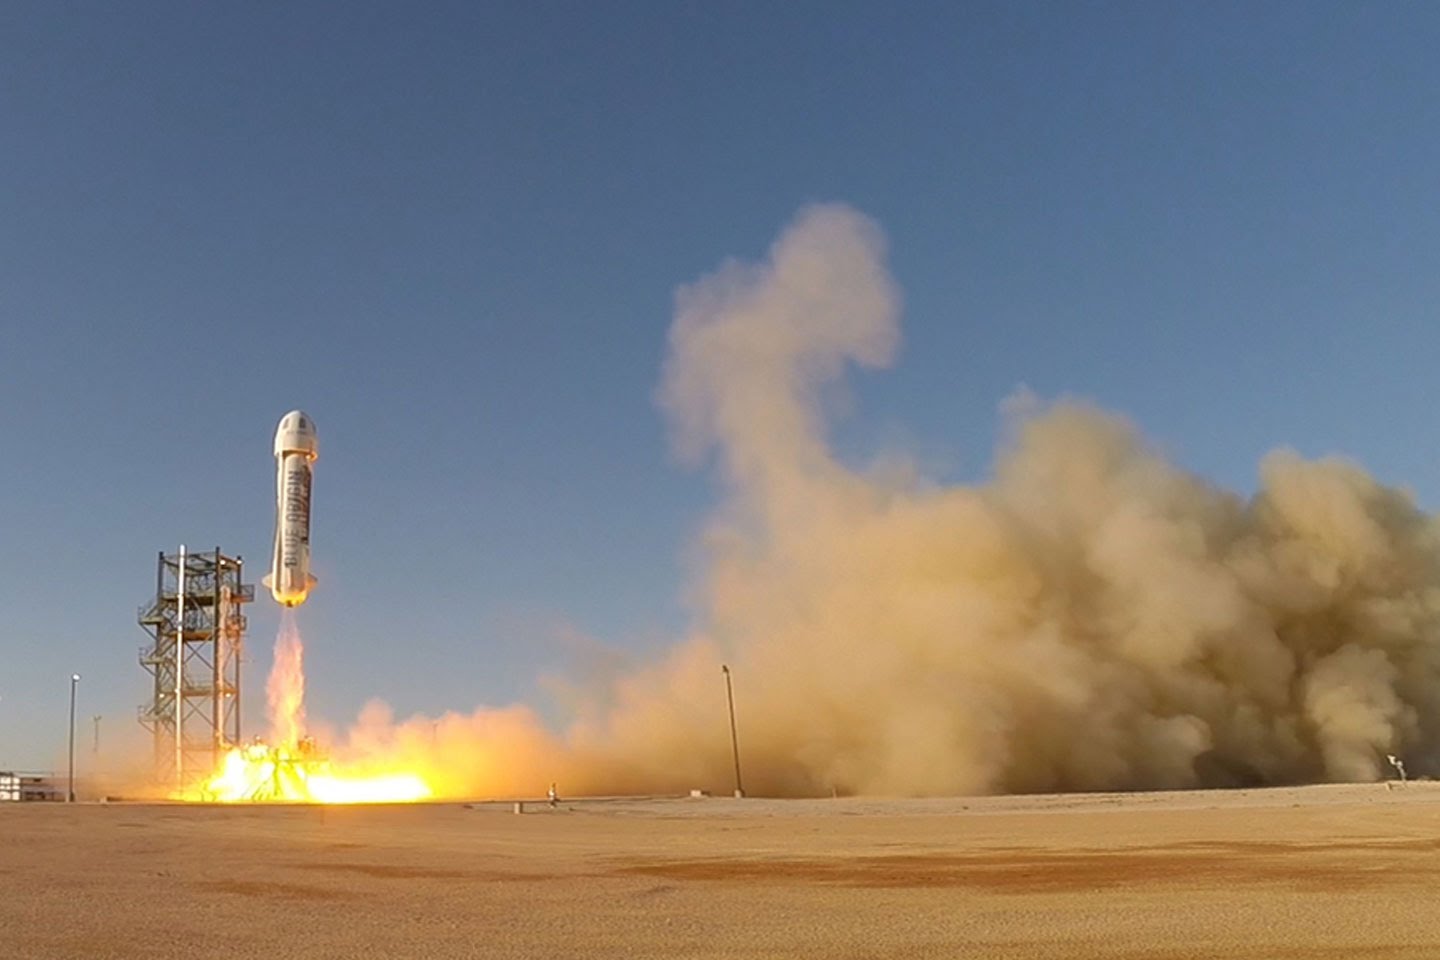 Blue Origin launch. Photo courtesy of Blue Origin. Used with permission.